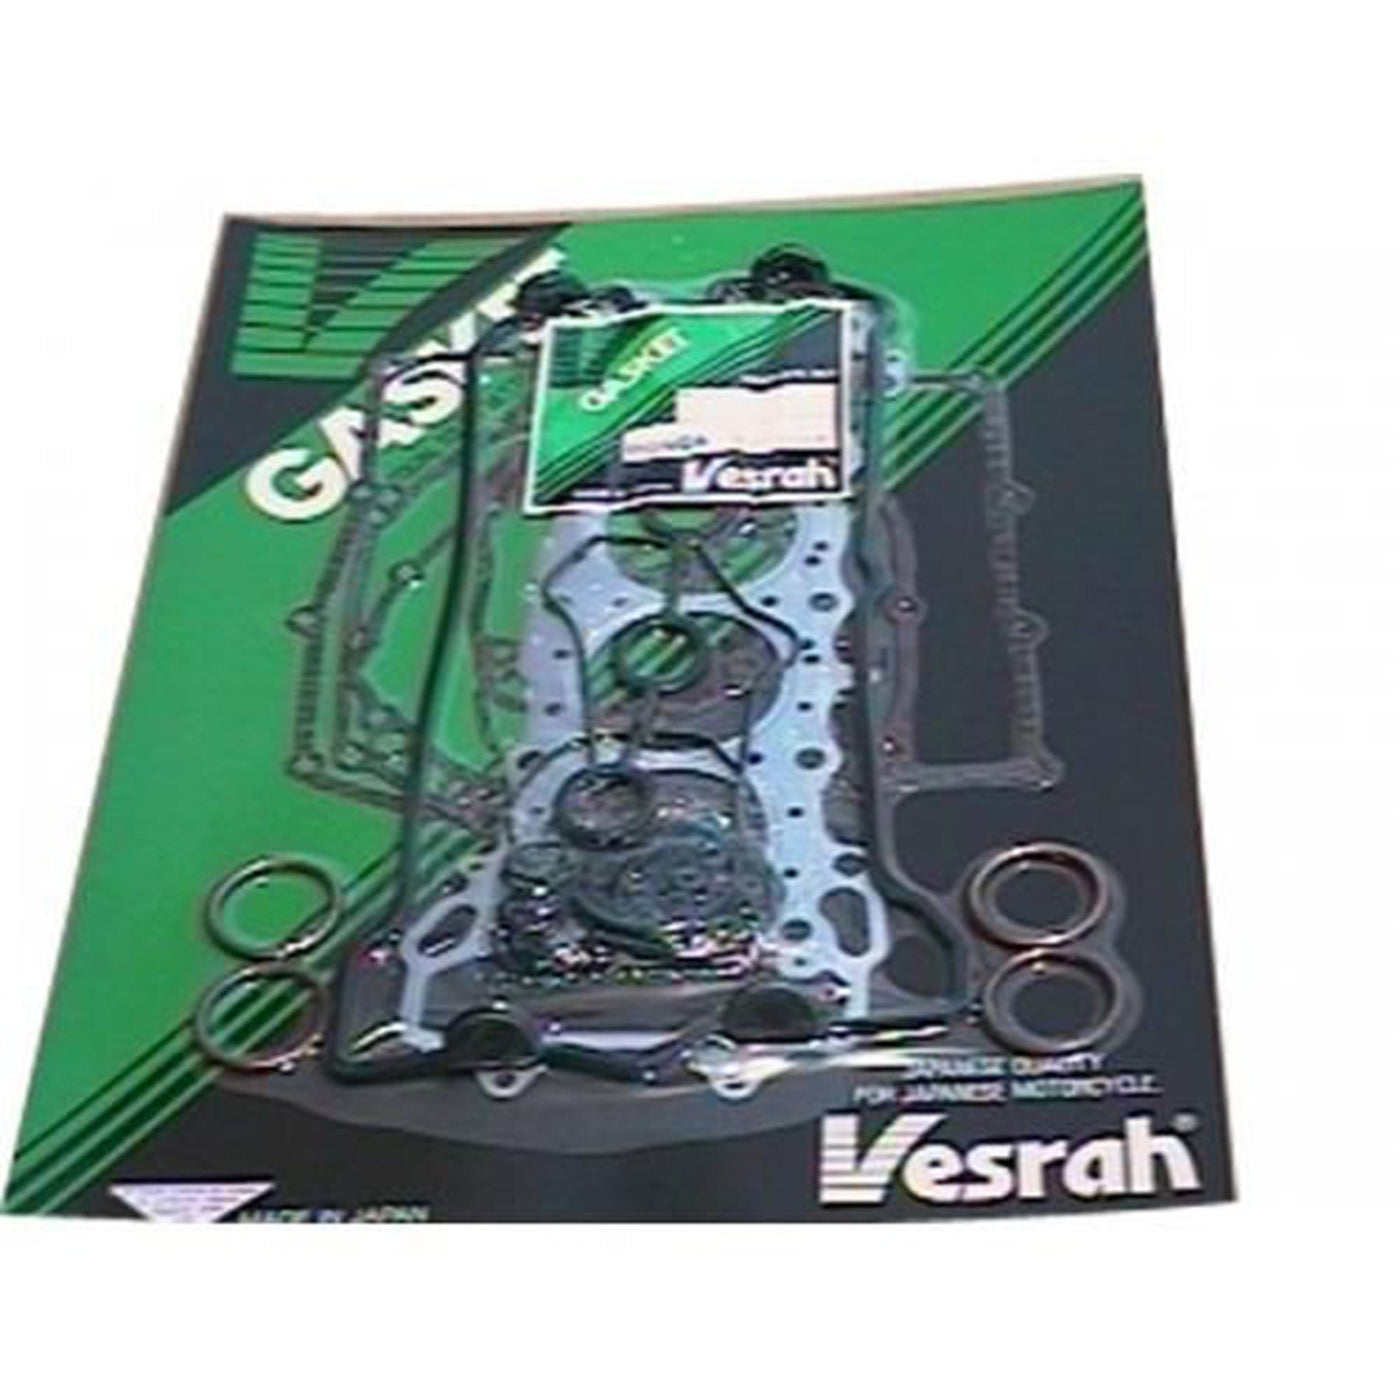 Vesrah VG-P008C Complete Gasket Set #VG-P008C